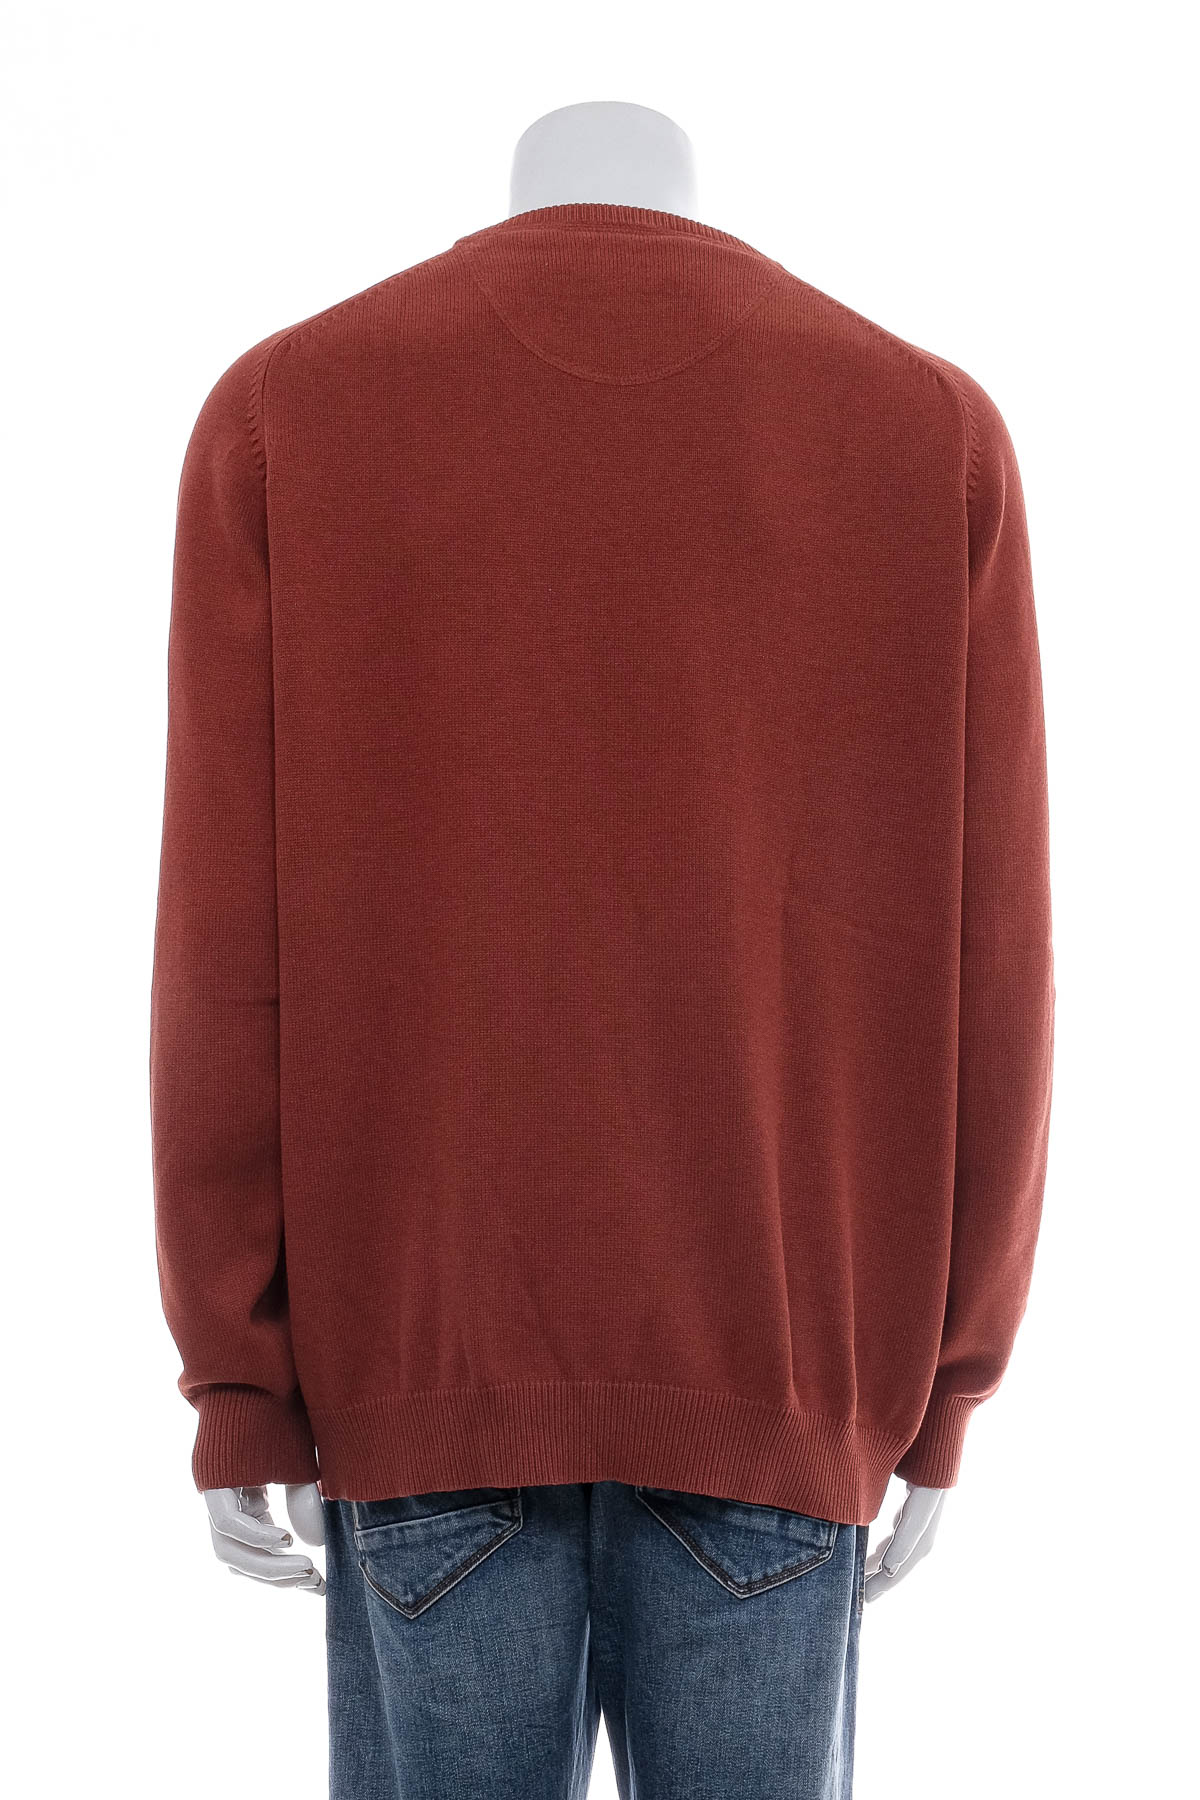 Men's sweater - Fynch Hatton - 1